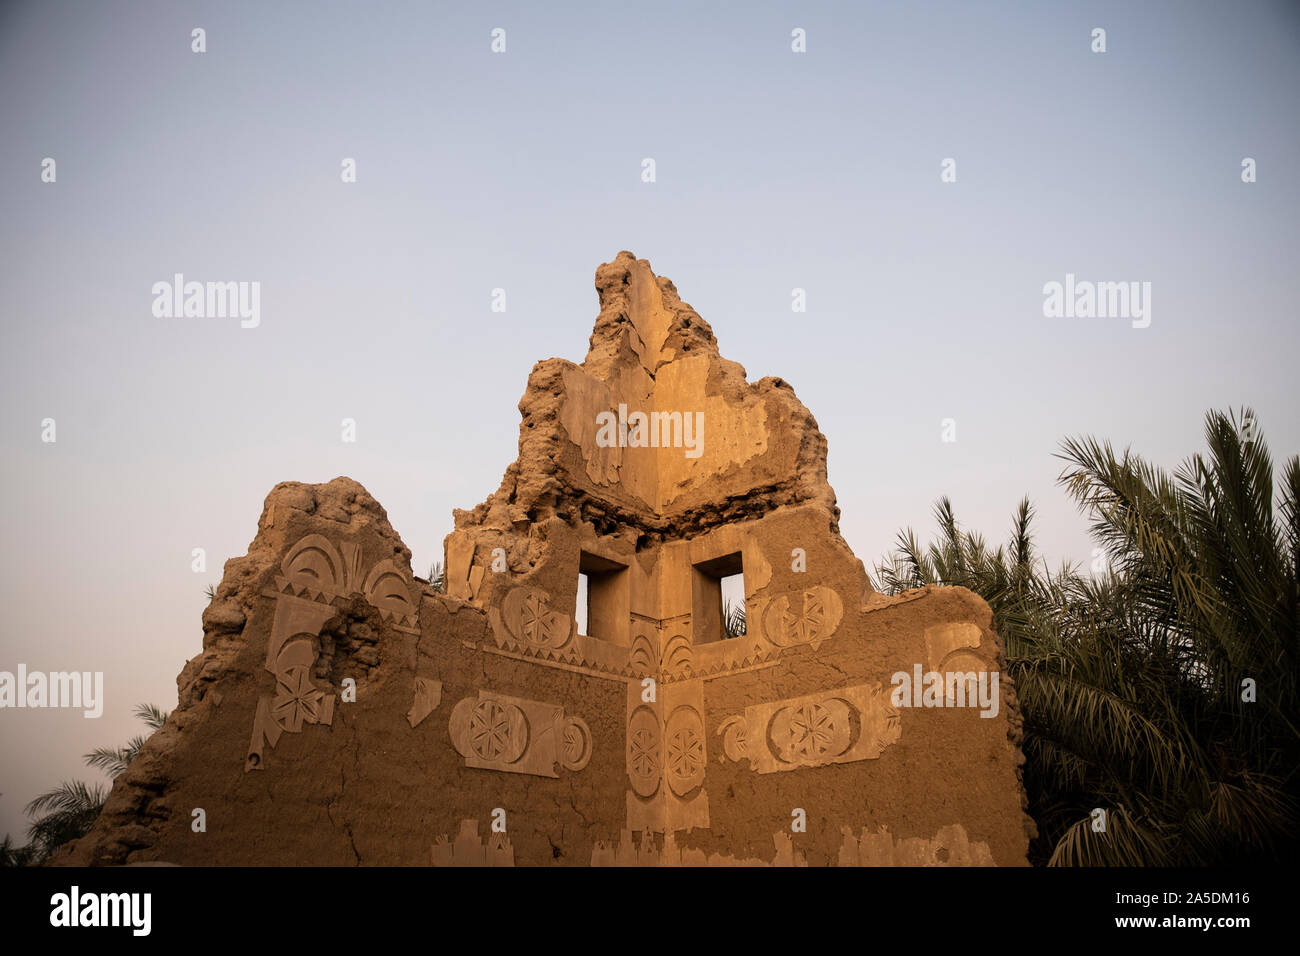 historical arabian house in saudi arabia Stock Photo